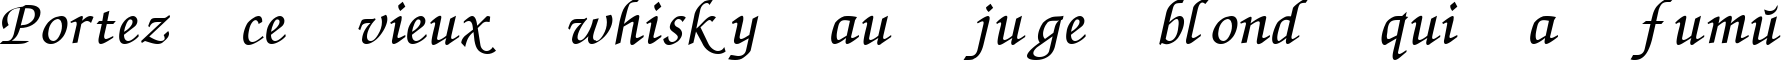 Пример написания шрифтом ZapfChancery Cyrillic Italic текста на французском